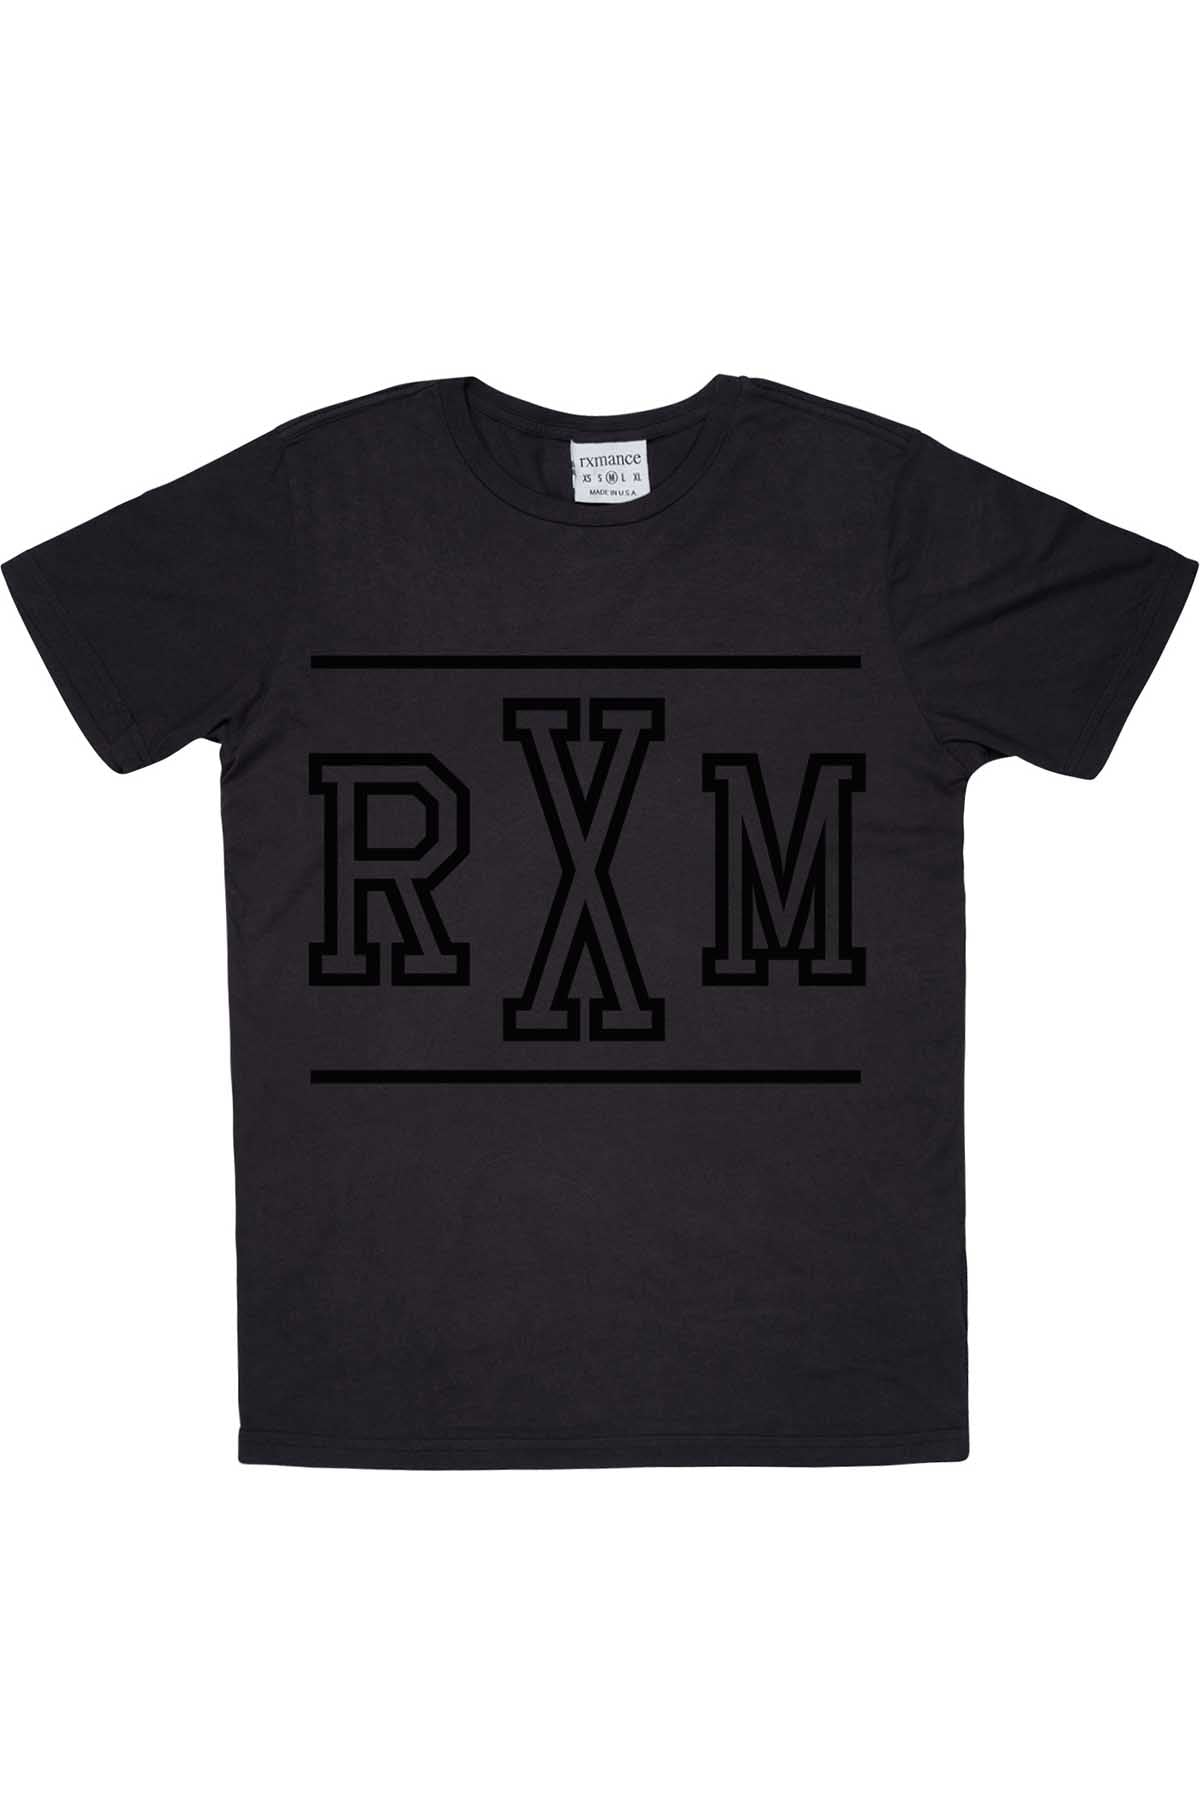 Rxmance Unisex Black Front/Back 'RXM Ten' Tee